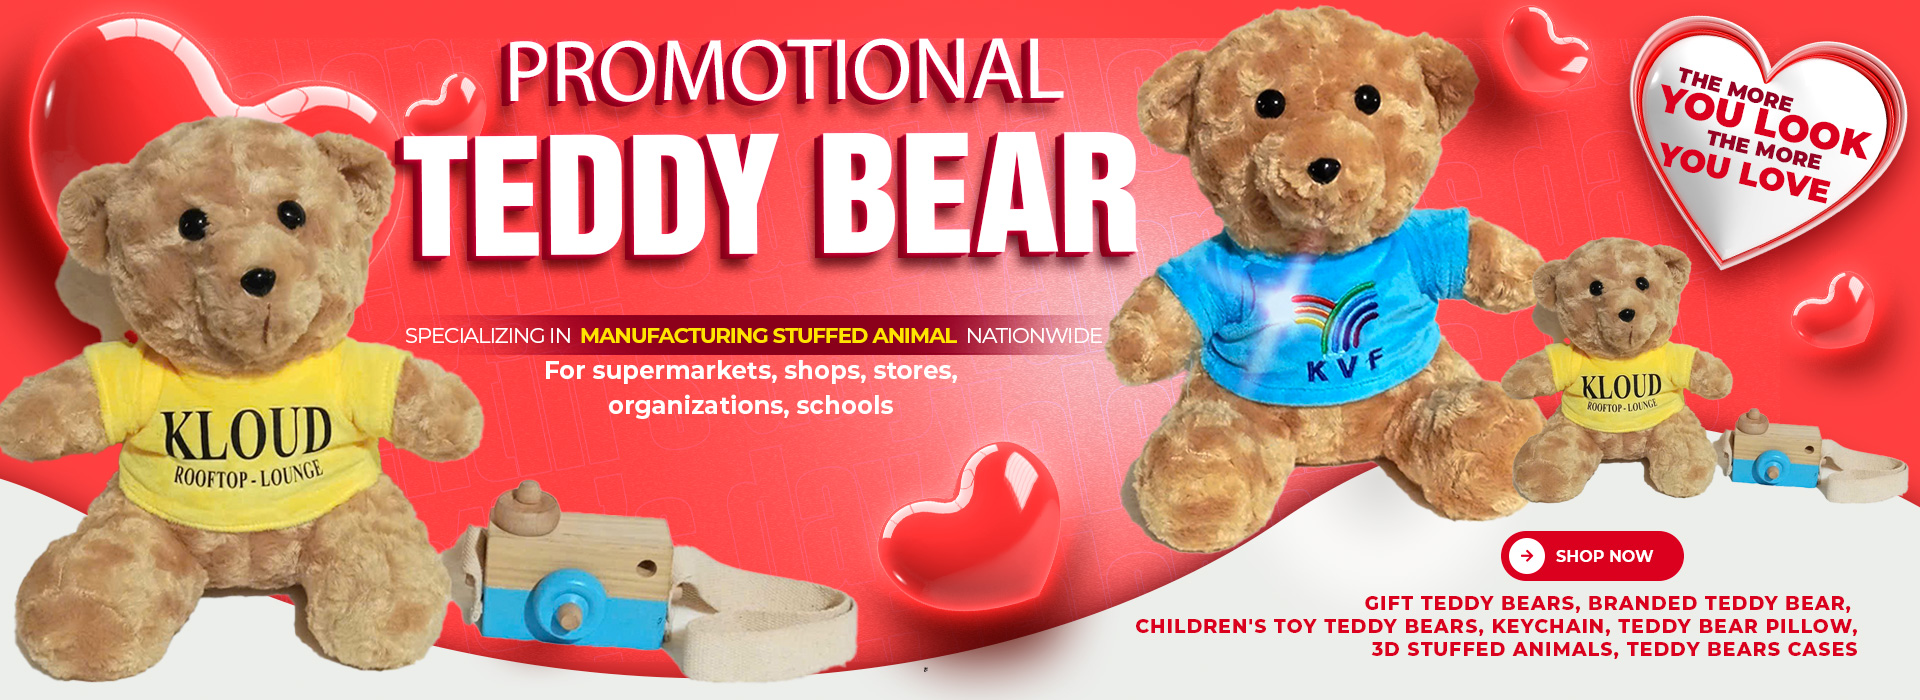 PROMOTIONAL TEDDY BEAR